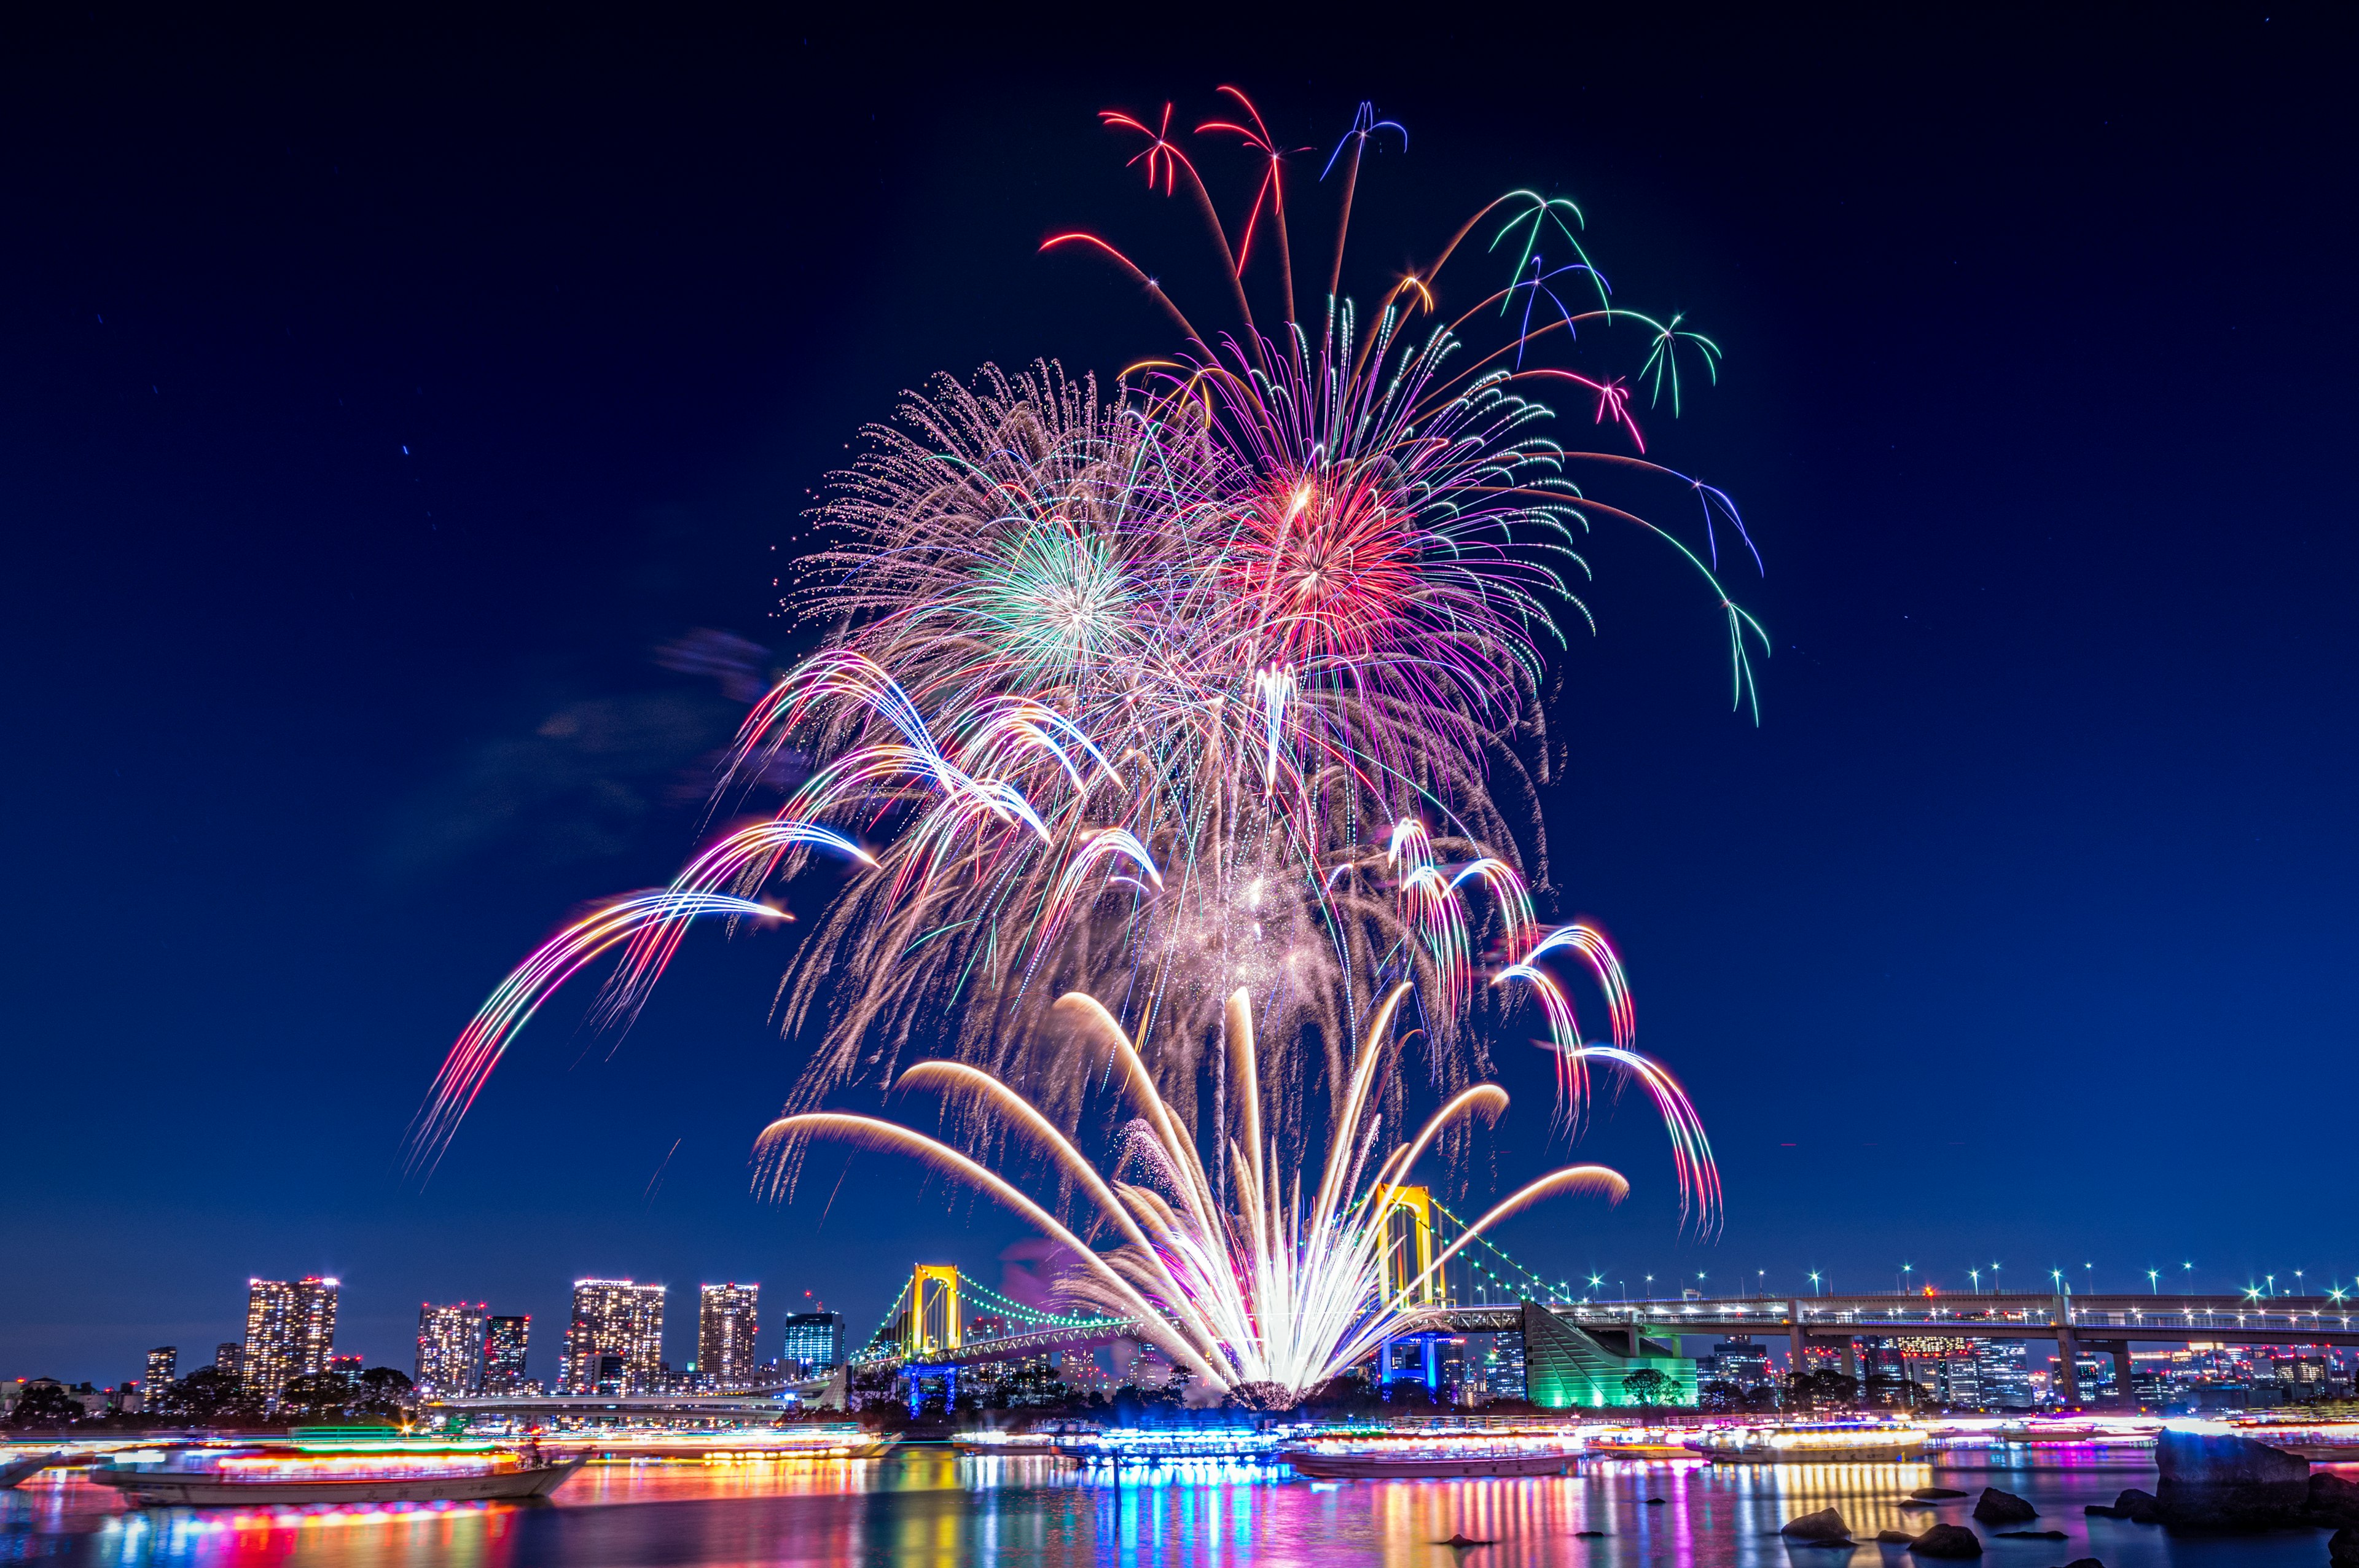 Tokyo Odaiba Rainbow Fireworks display 2017, Rainbow Bridge in seven colors lit.